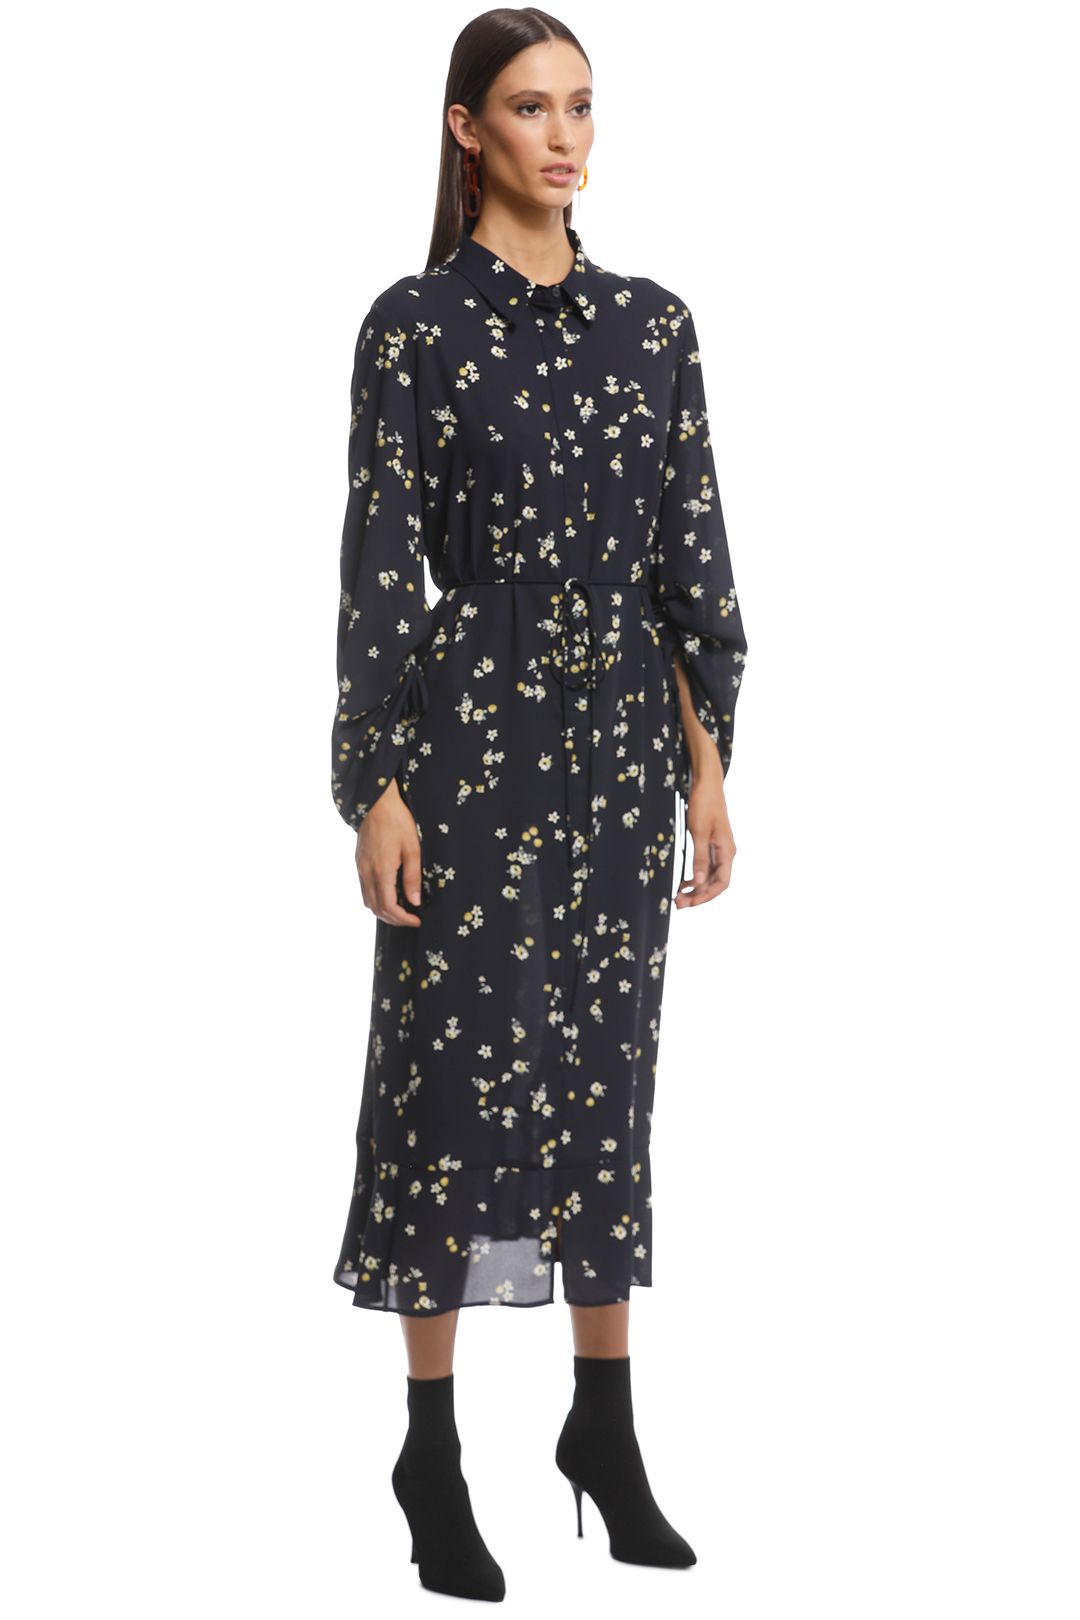 Veronika Maine - Dainty Floral Shirt Dress - Black Floral - Side